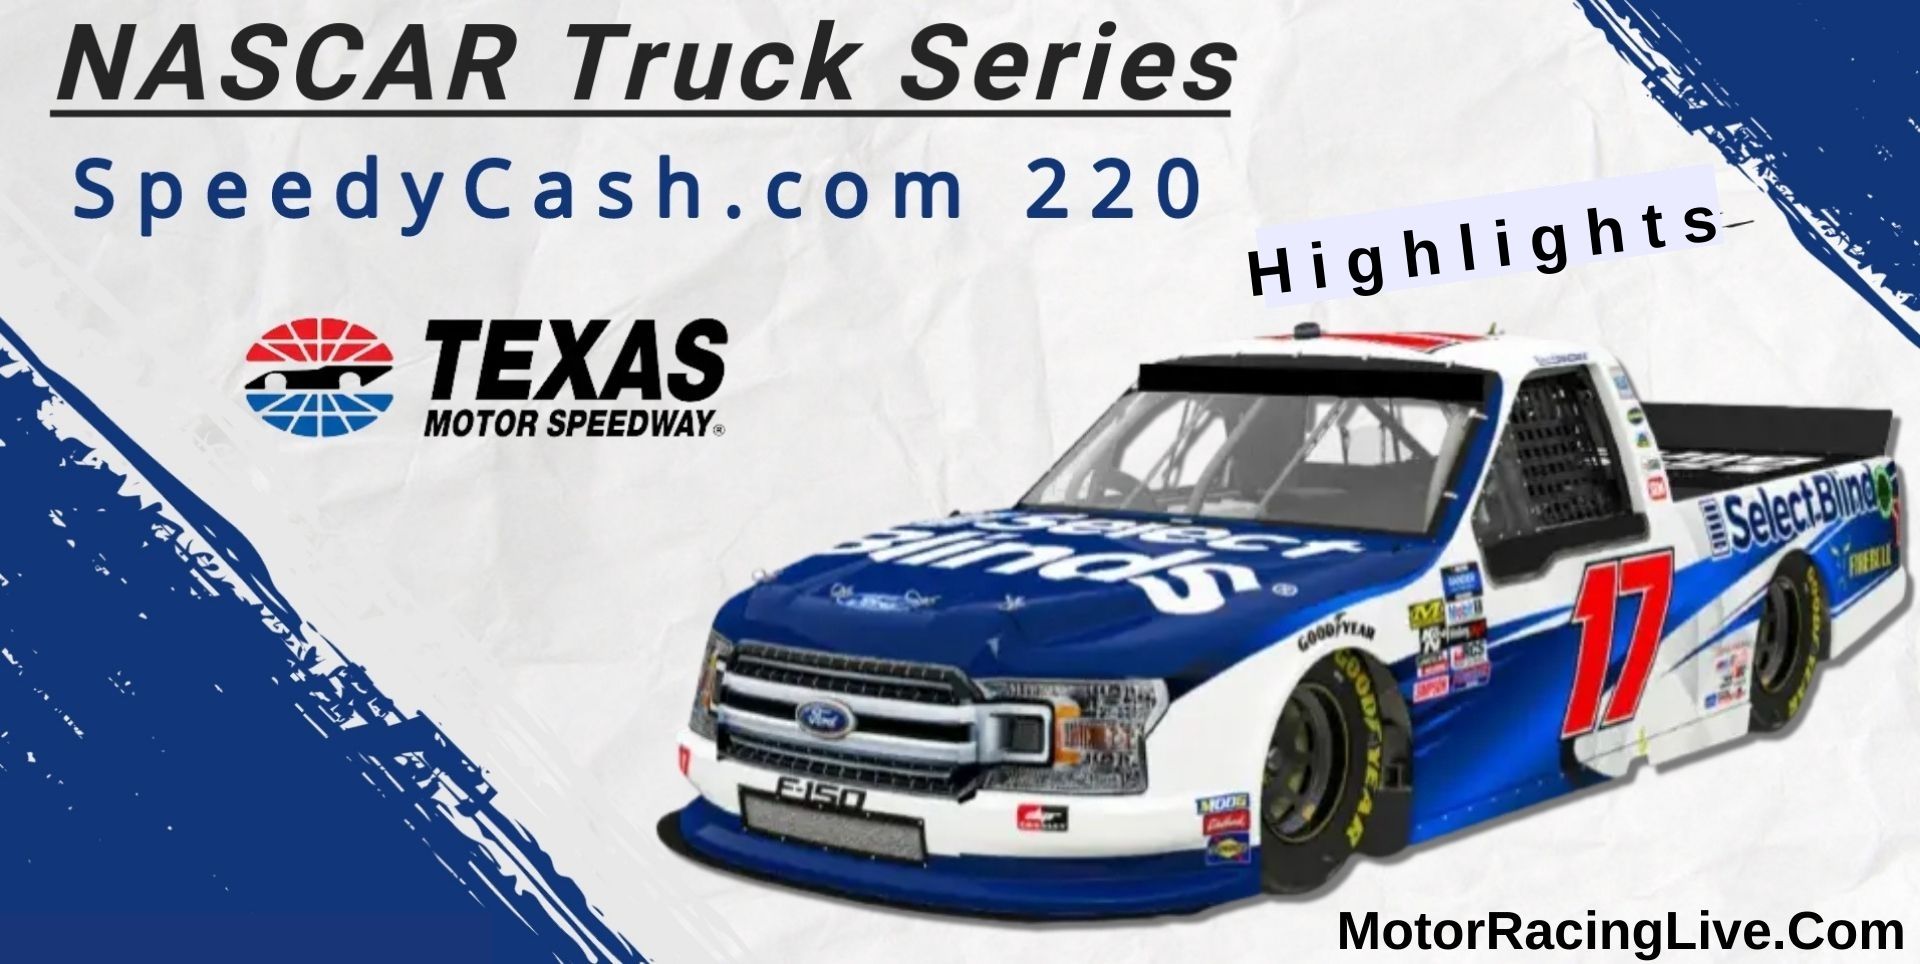 SpeedyCash Com 220 Highlights 2022 NASCAR Truck